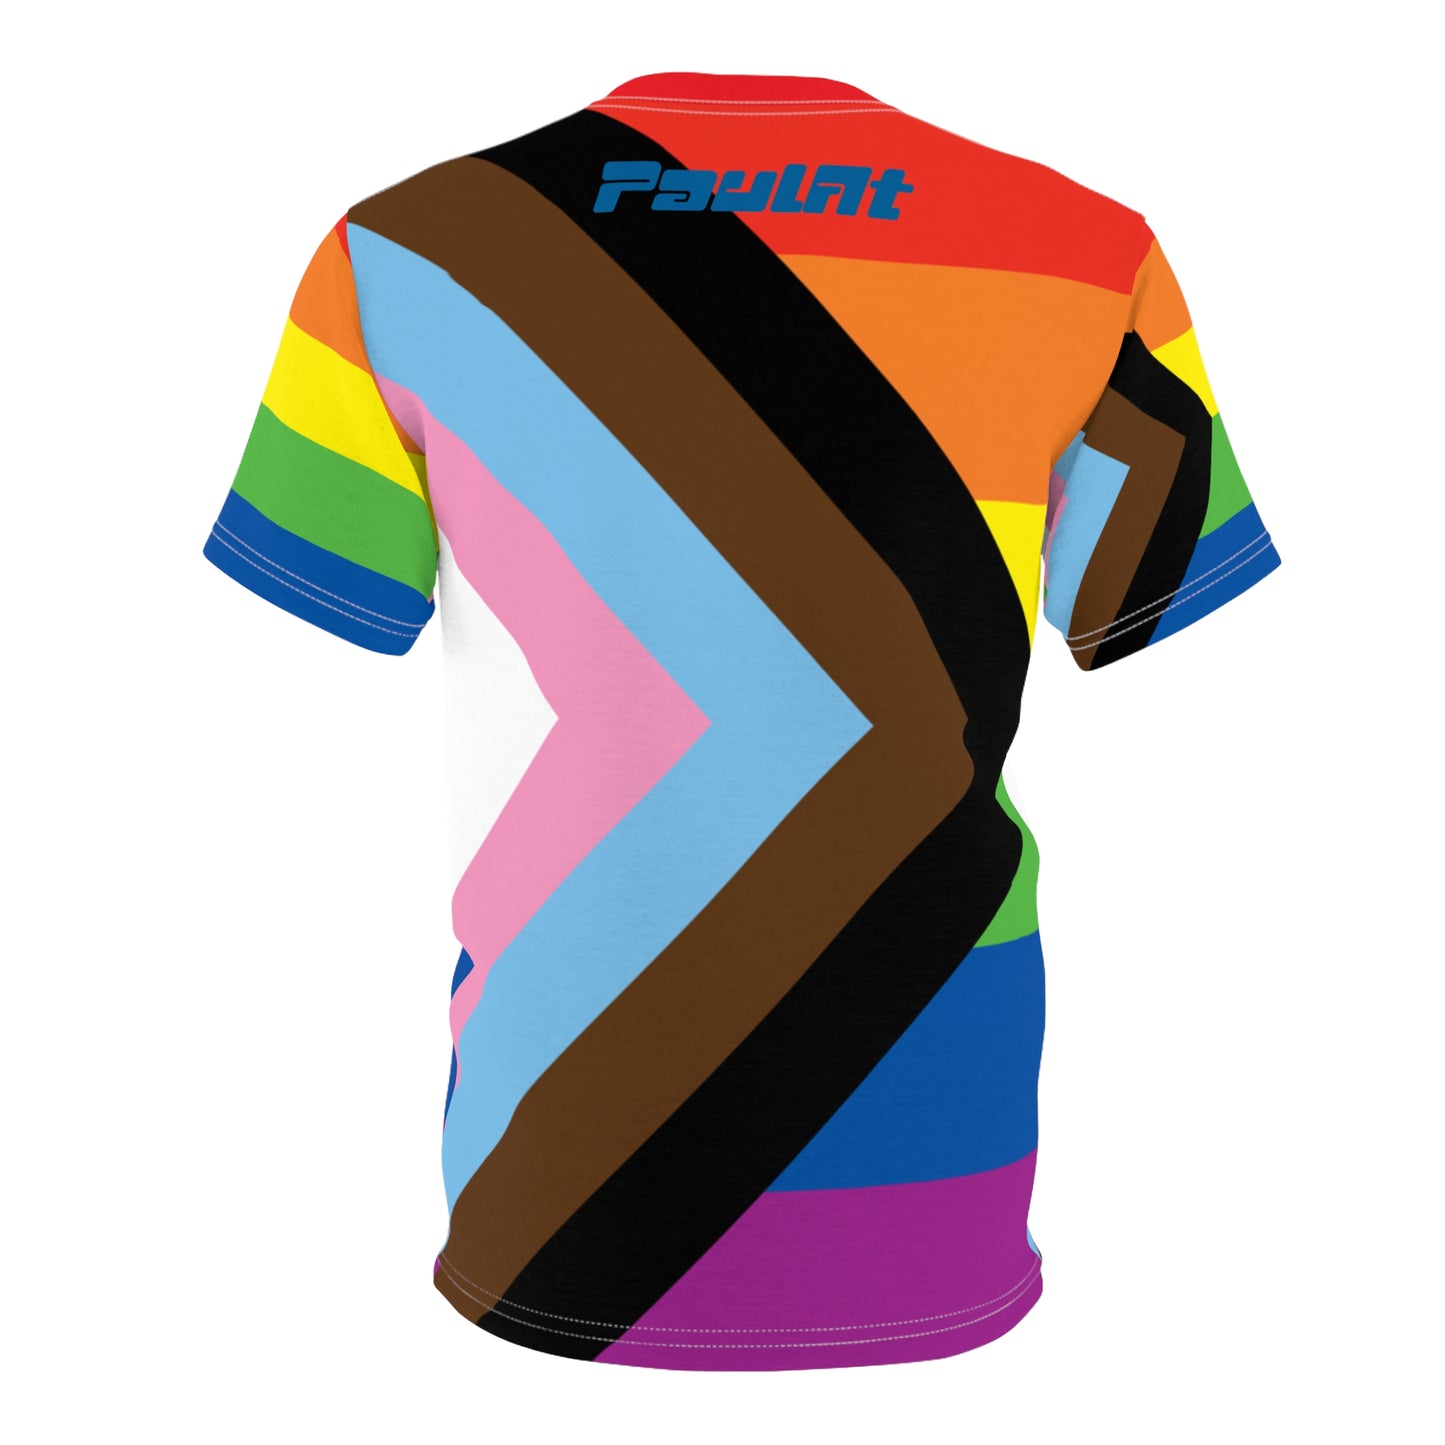 Progress Pride Unisex T-Shirt